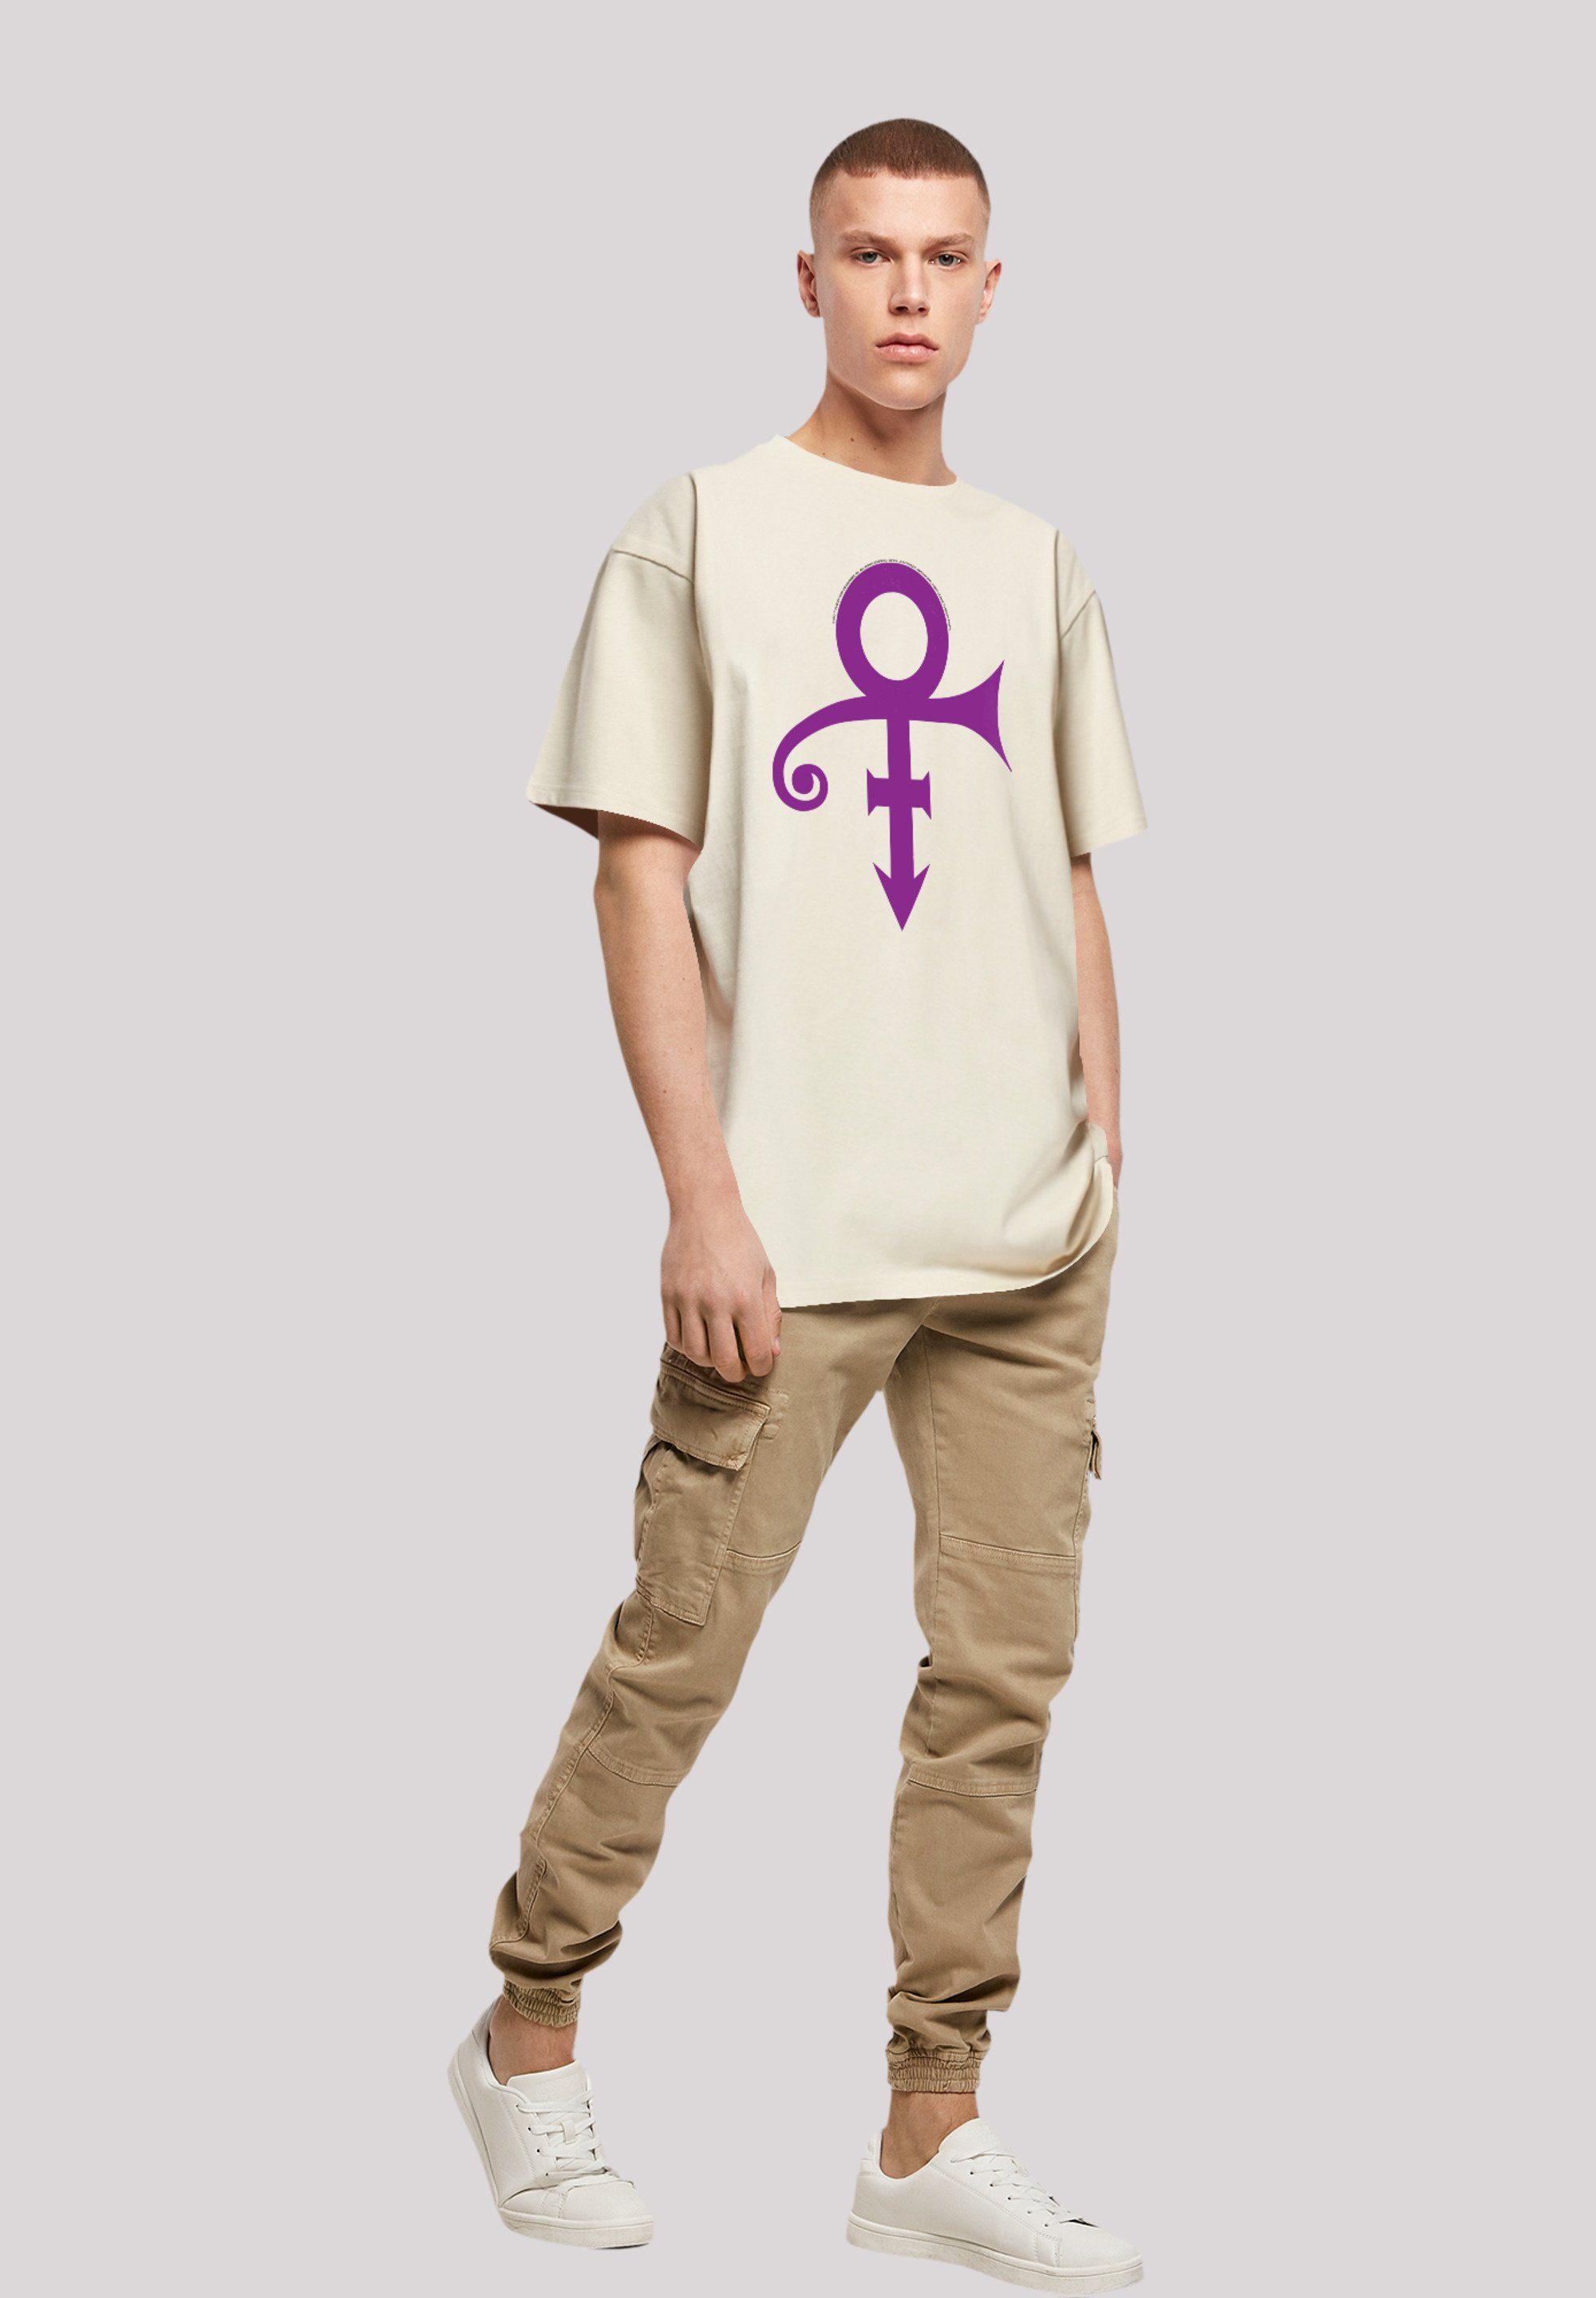 F4NT4STIC T-Shirt Prince Rock-Musik, Musik sand Album Band Qualität, Logo Premium